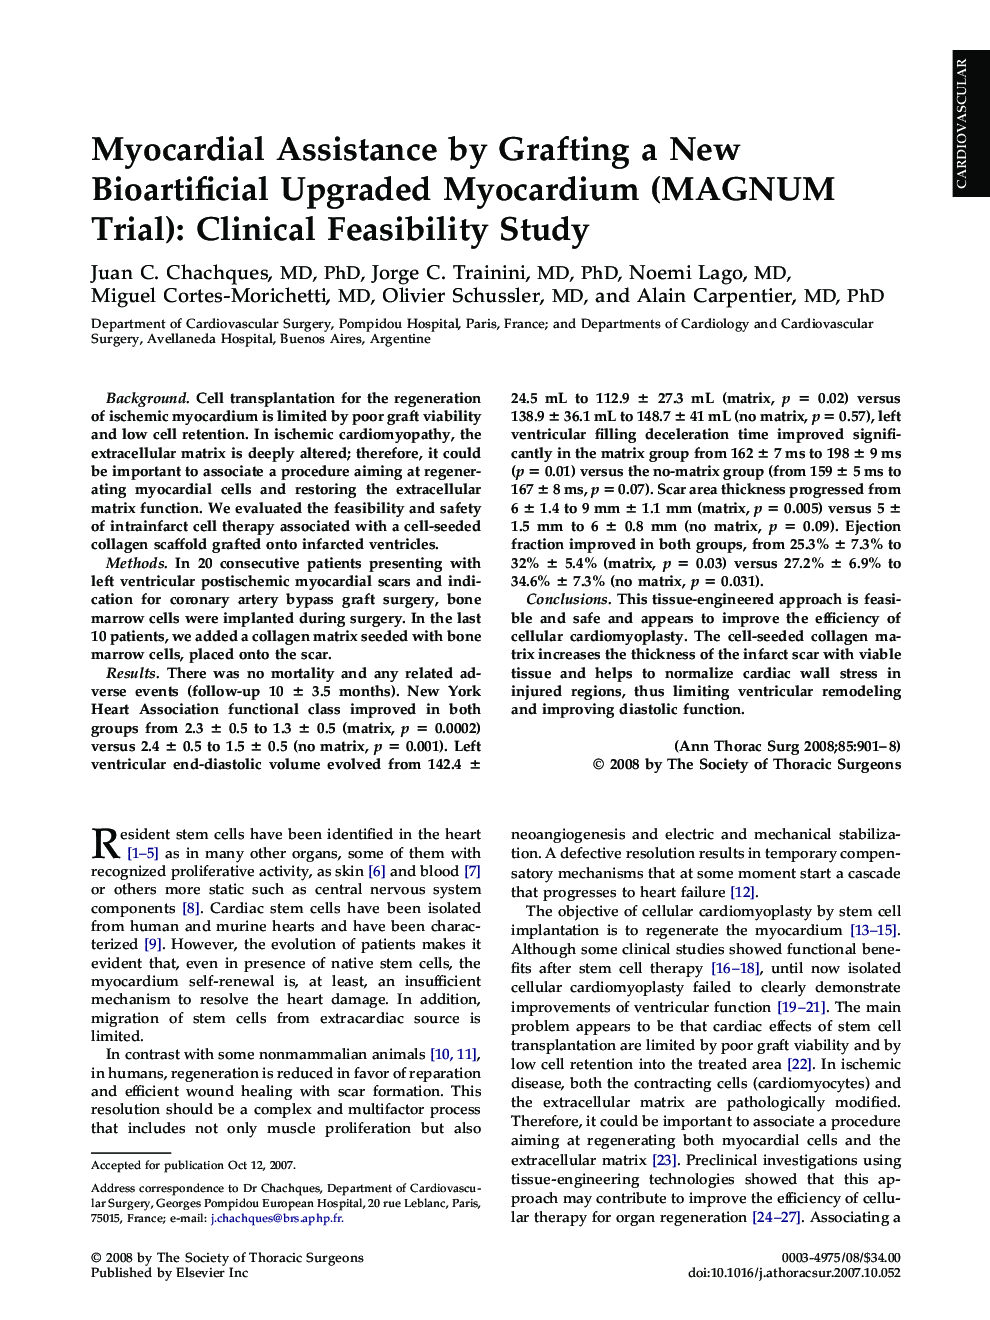 Myocardial Assistance by Grafting a New Bioartificial Upgraded Myocardium (MAGNUM Trial): Clinical Feasibility Study